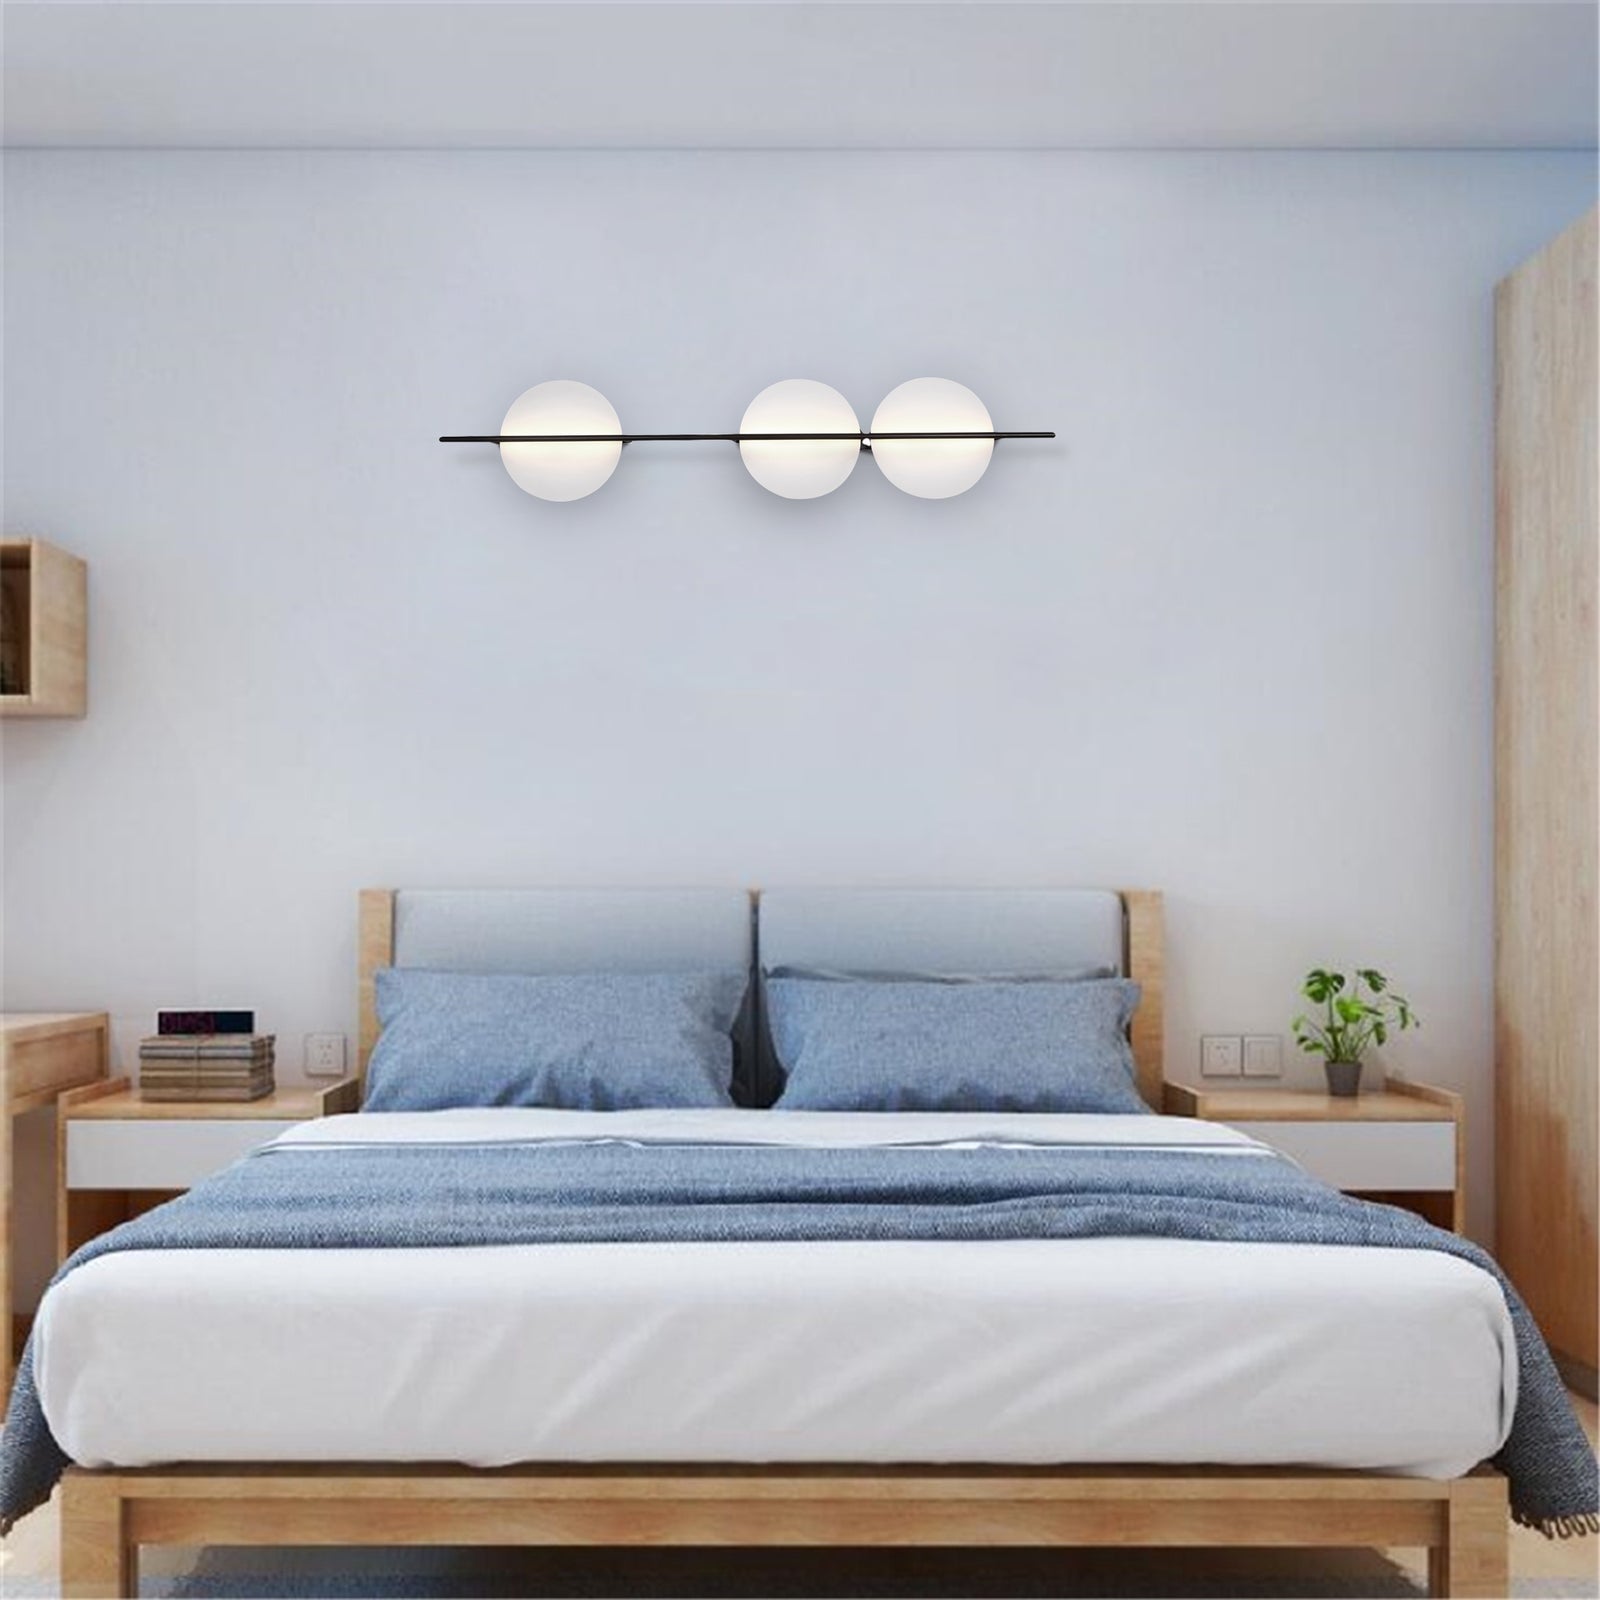 bedroom lights : a comprehensive guide on bedroom lighting ideas